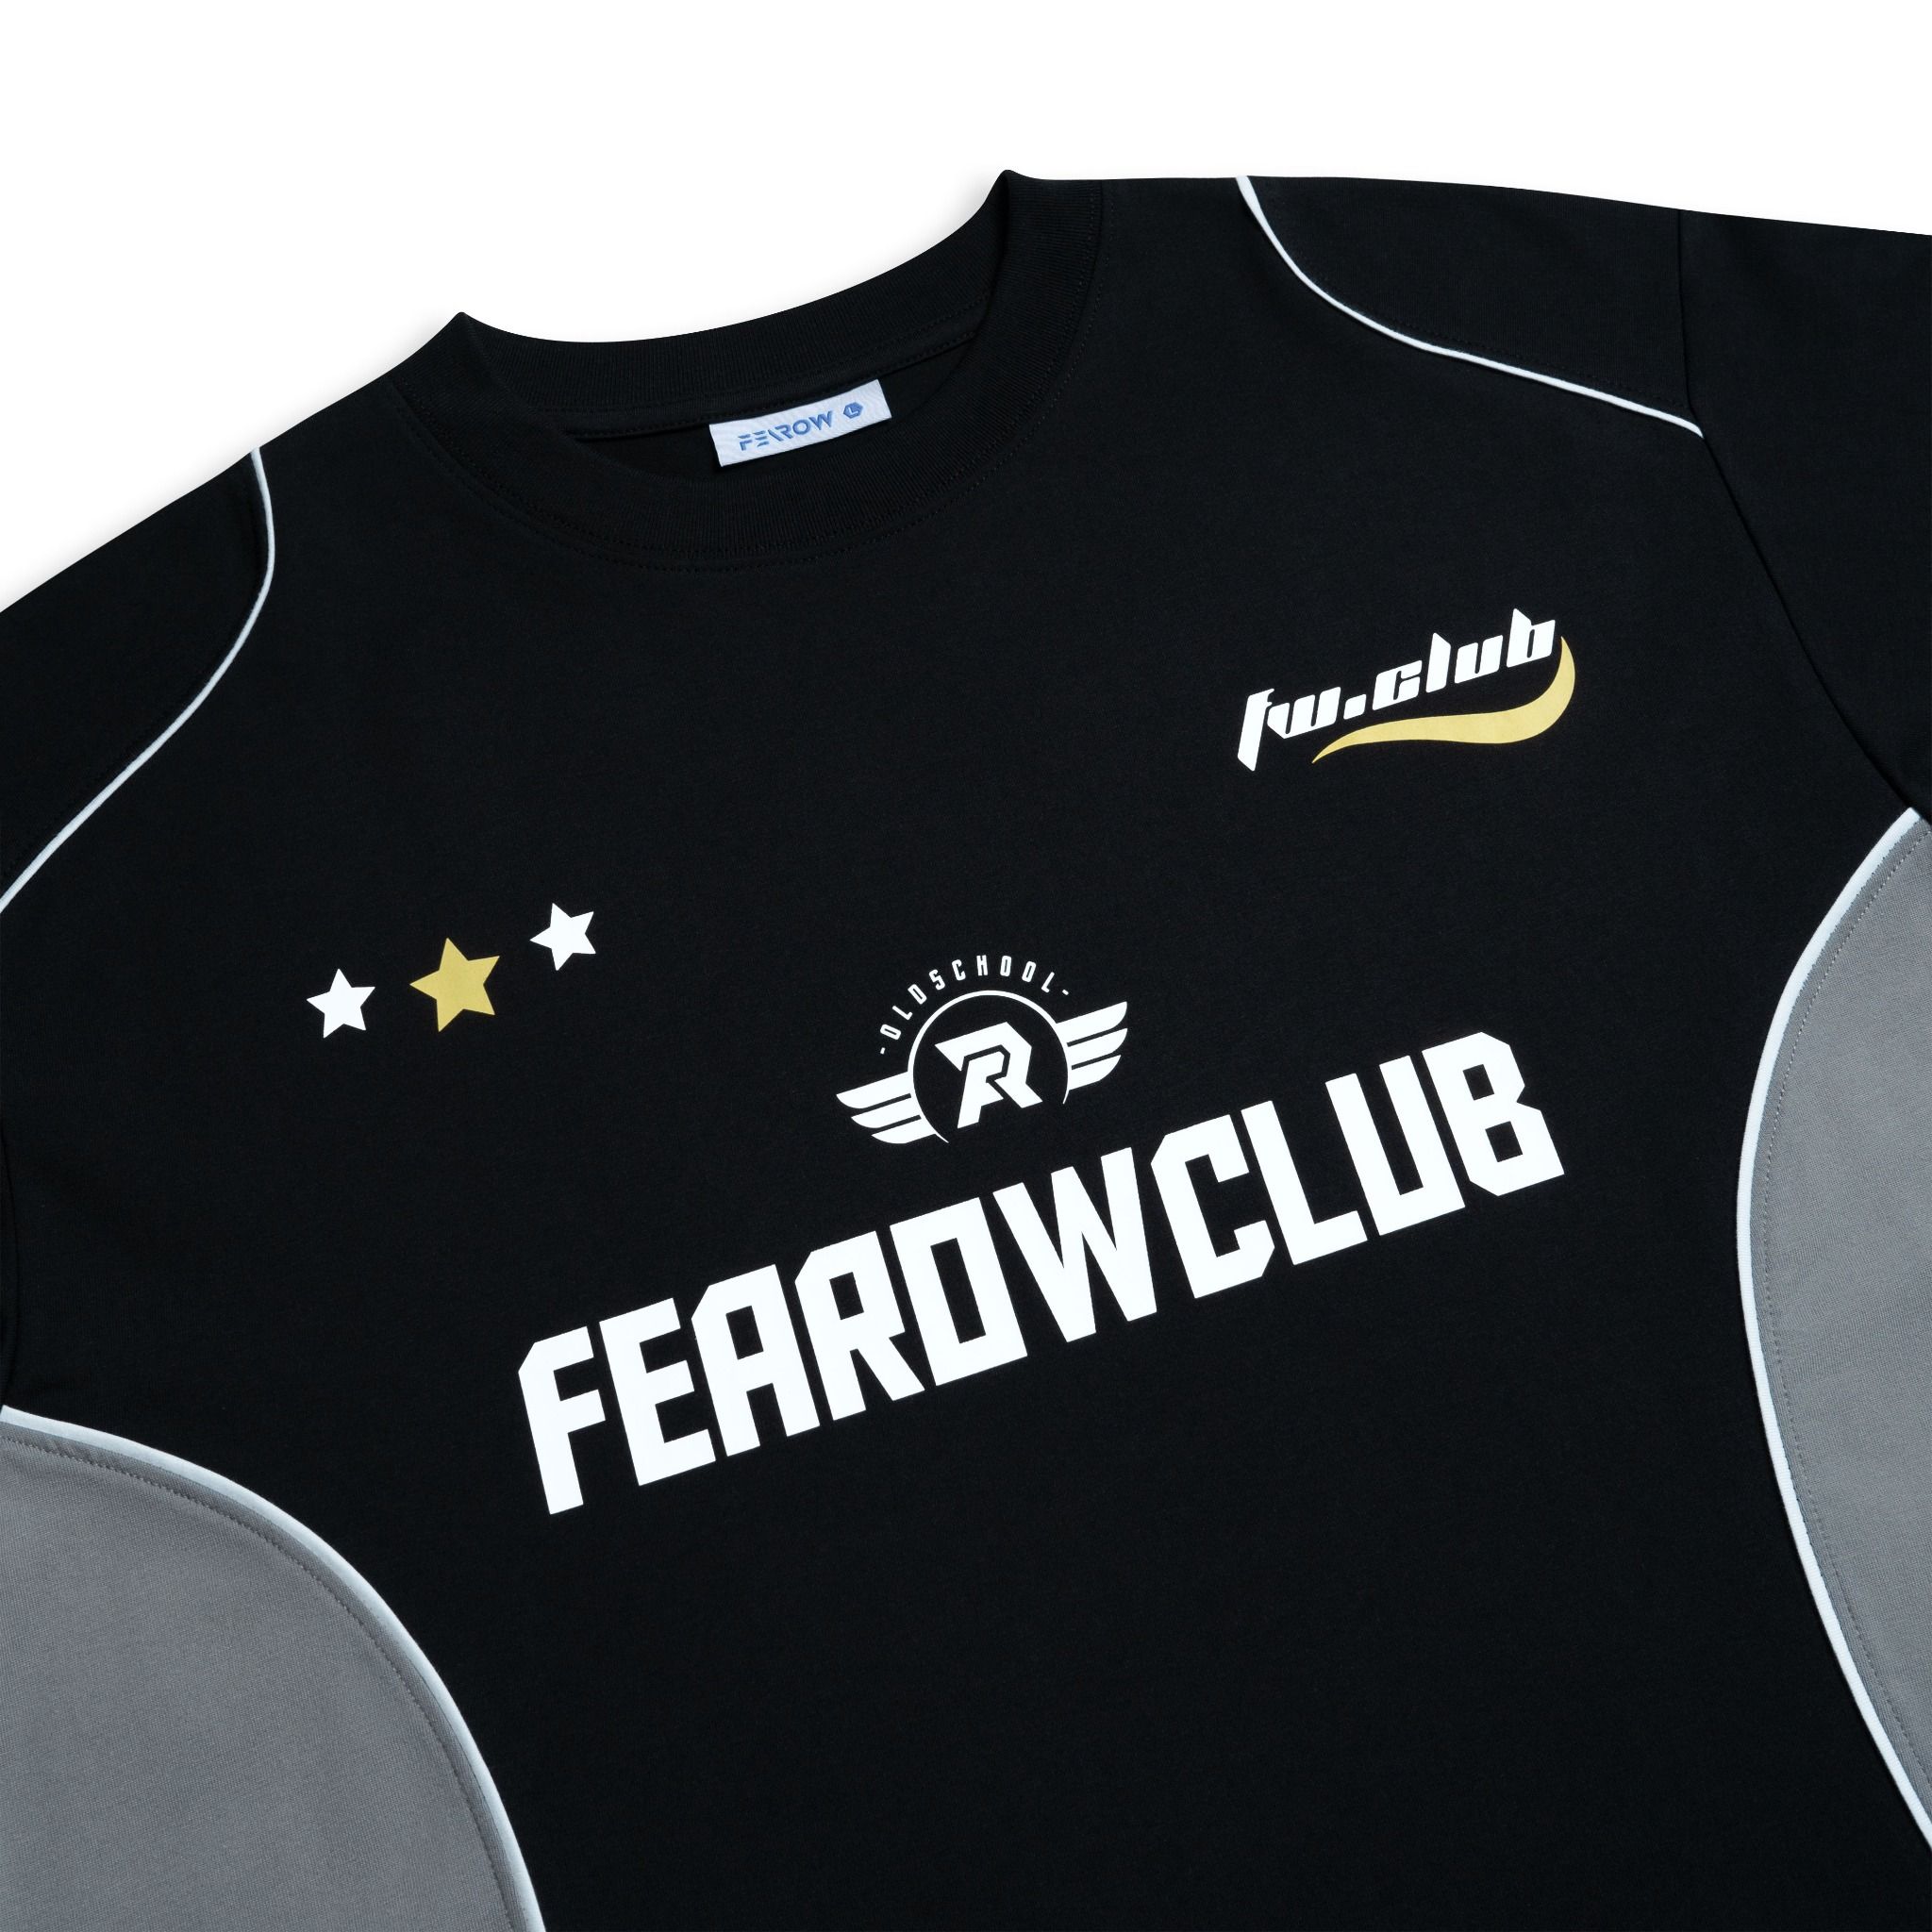  Ferow Sports Club Tee / Black & Gray 